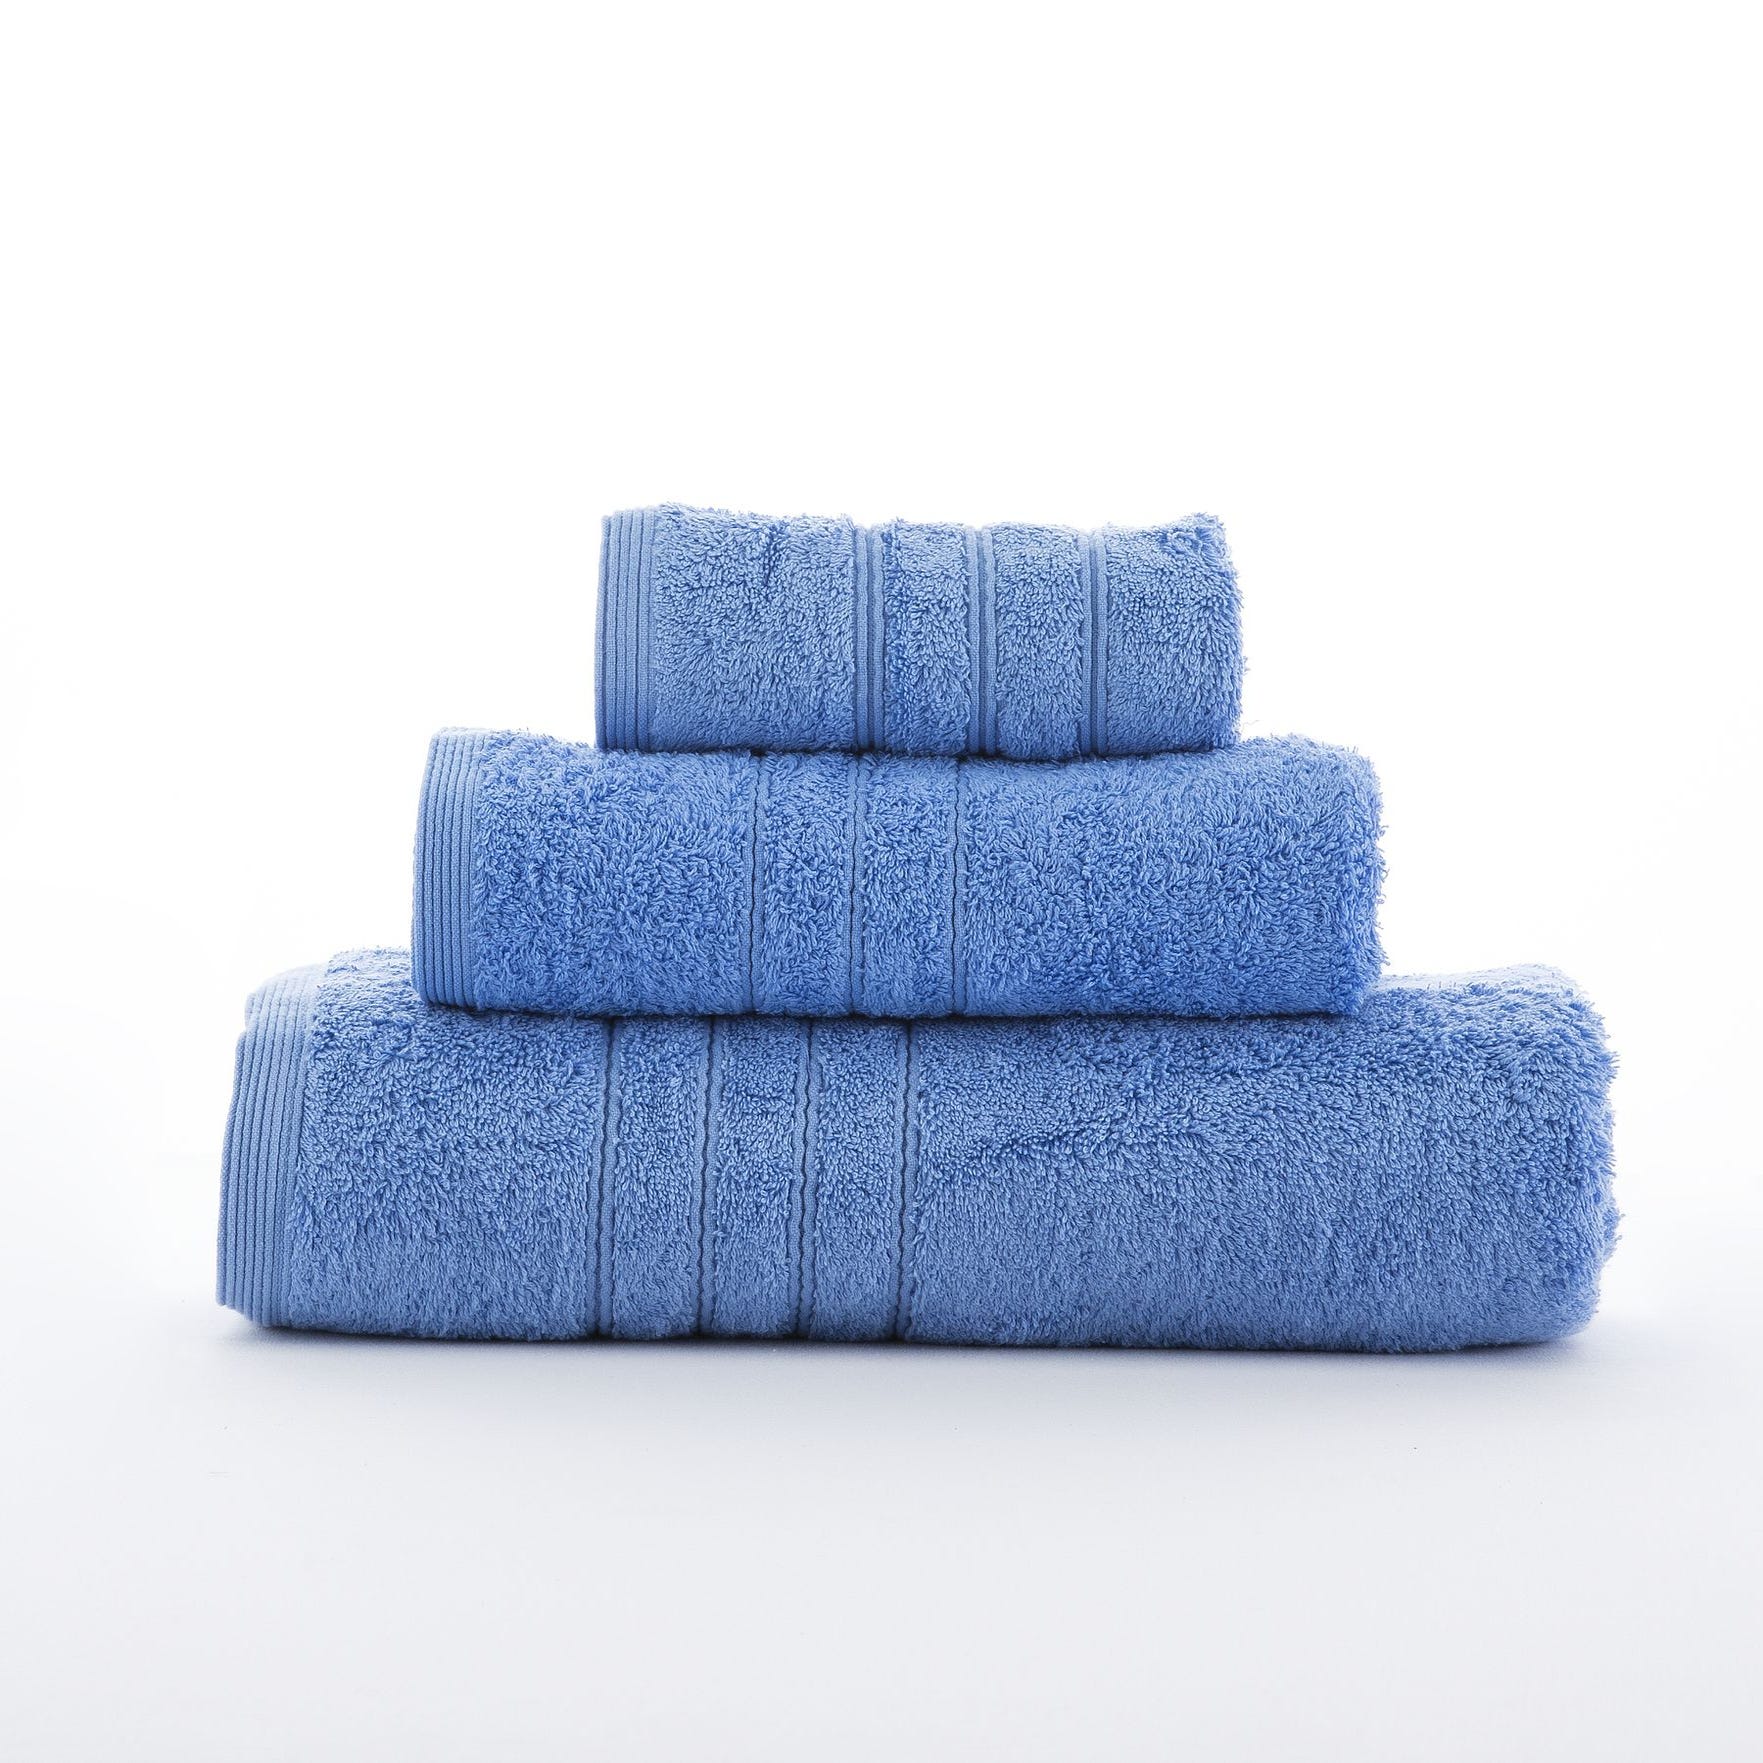 Set de toalla y toallón algodón egipcio 600 g/m2